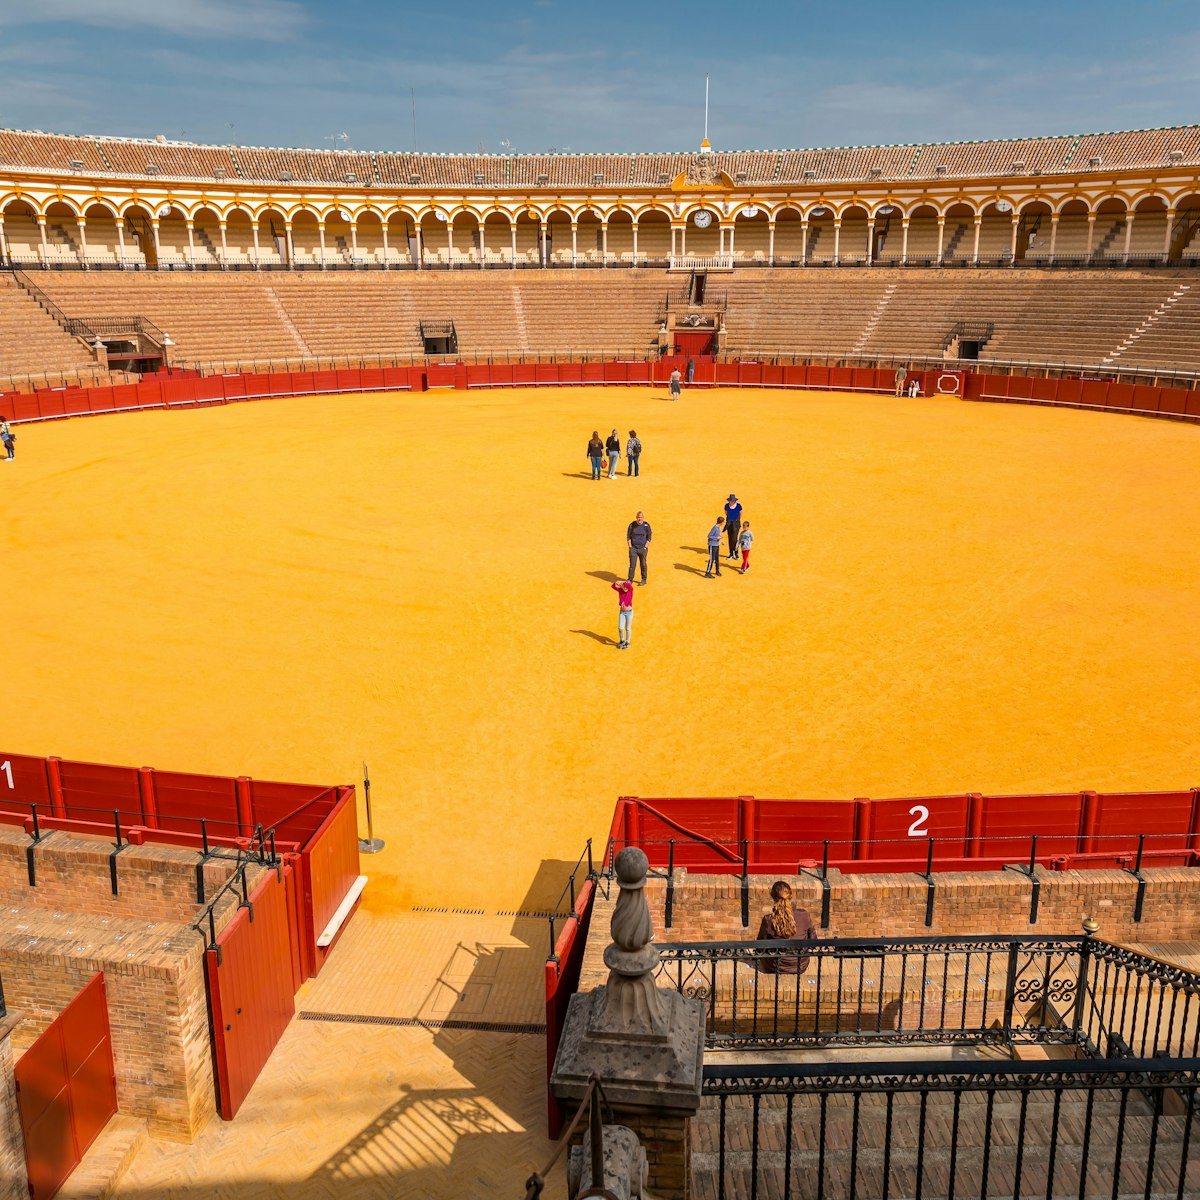 The Plaza de Toros de la Real Maestranza de Caballeria de Sevilla is a 12,000 capacity bullring in Seville, Spain.